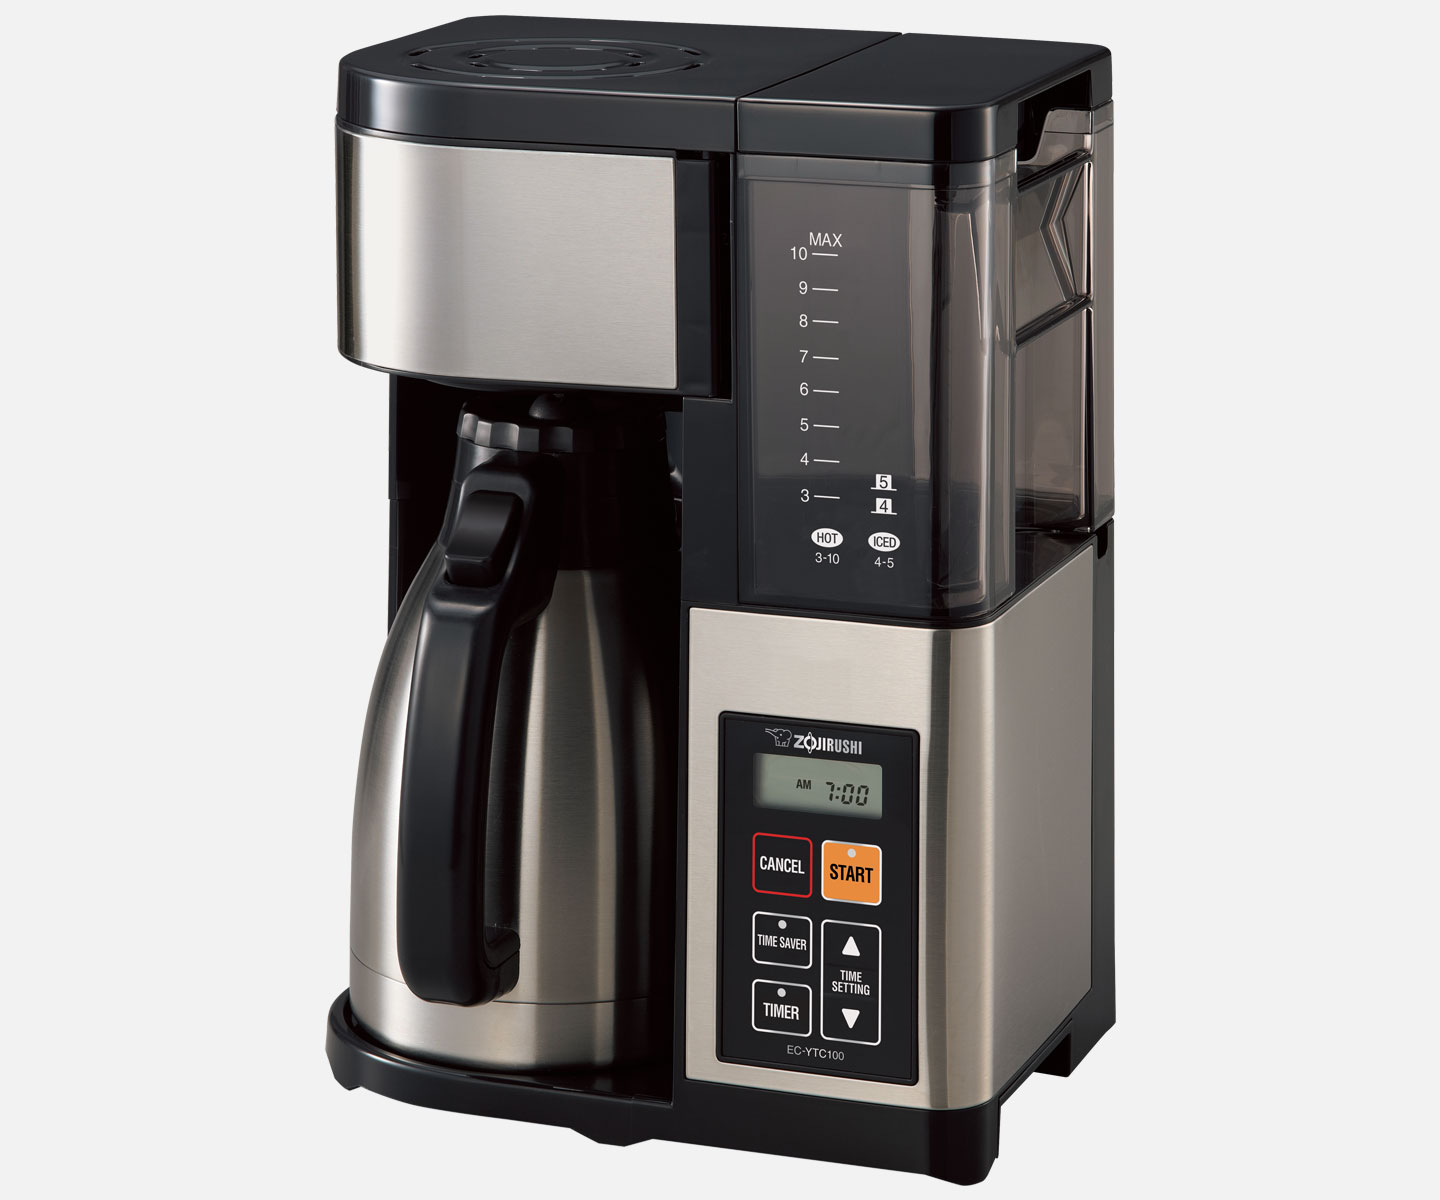 Zojirushi 12-Cup EC-YGC120XB Fresh Brew Plus Coffee Maker